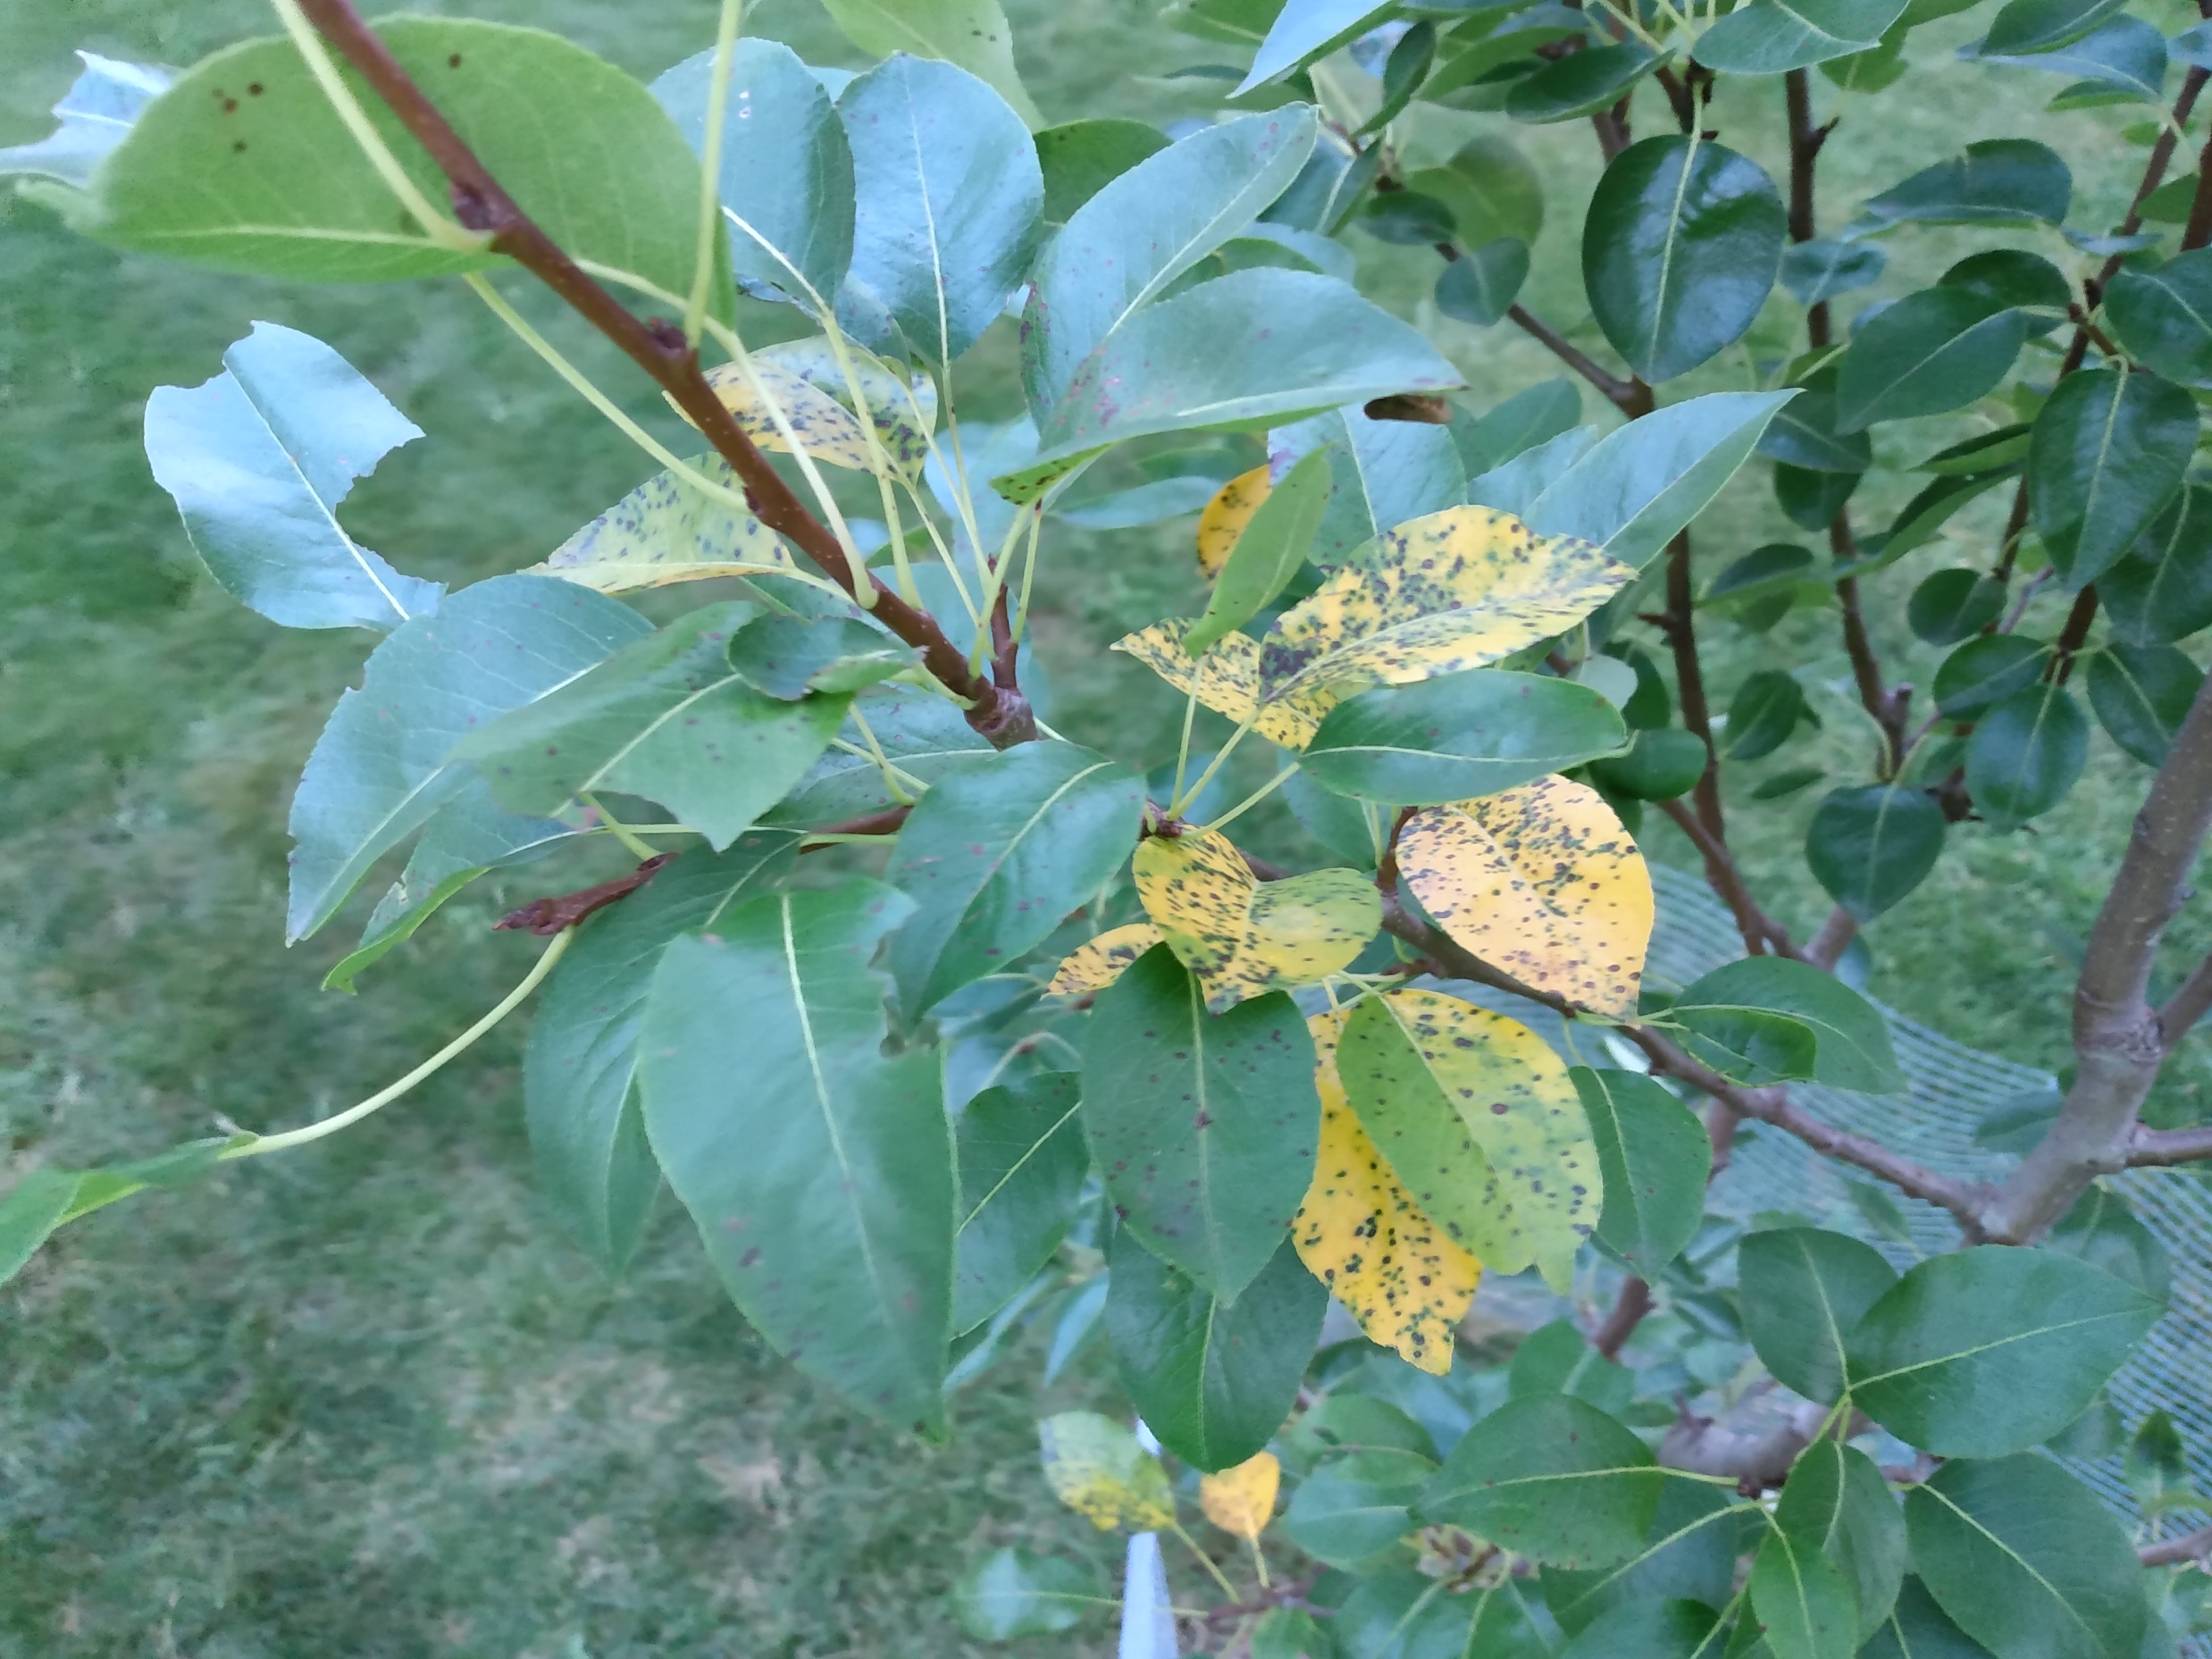 pear tree identification by leaf